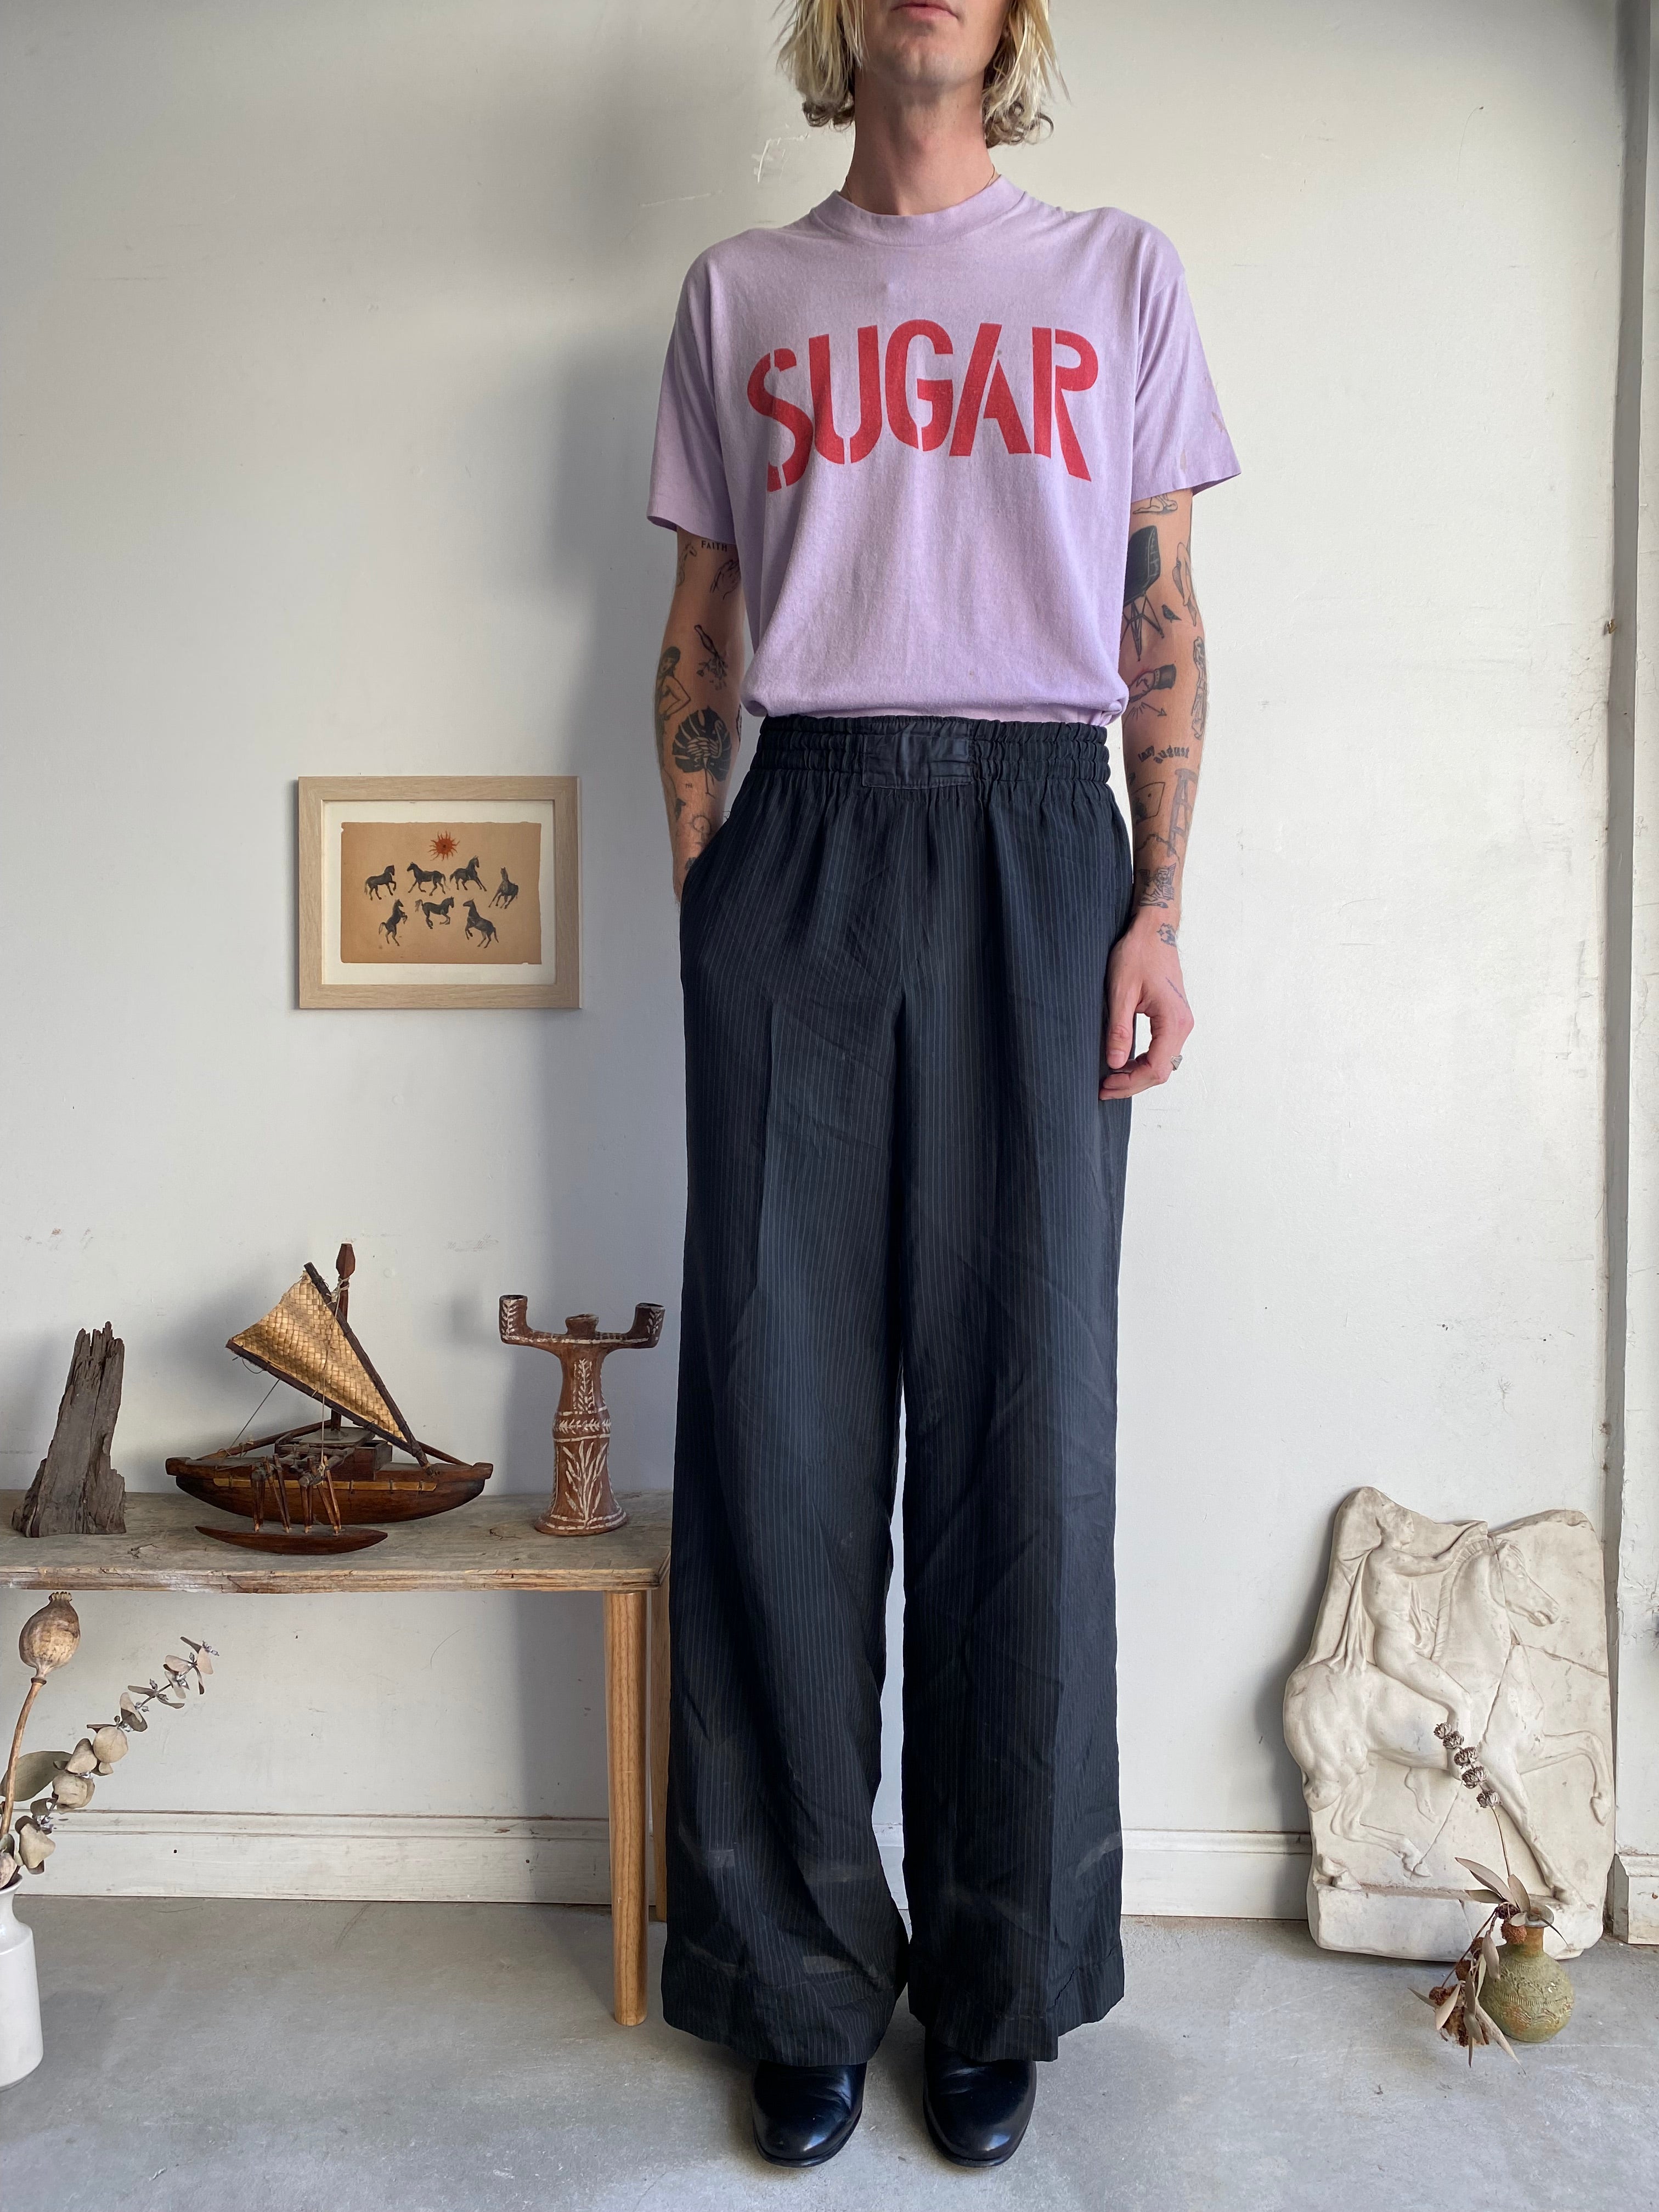 1980s Sugar T-Shirt (M/L)